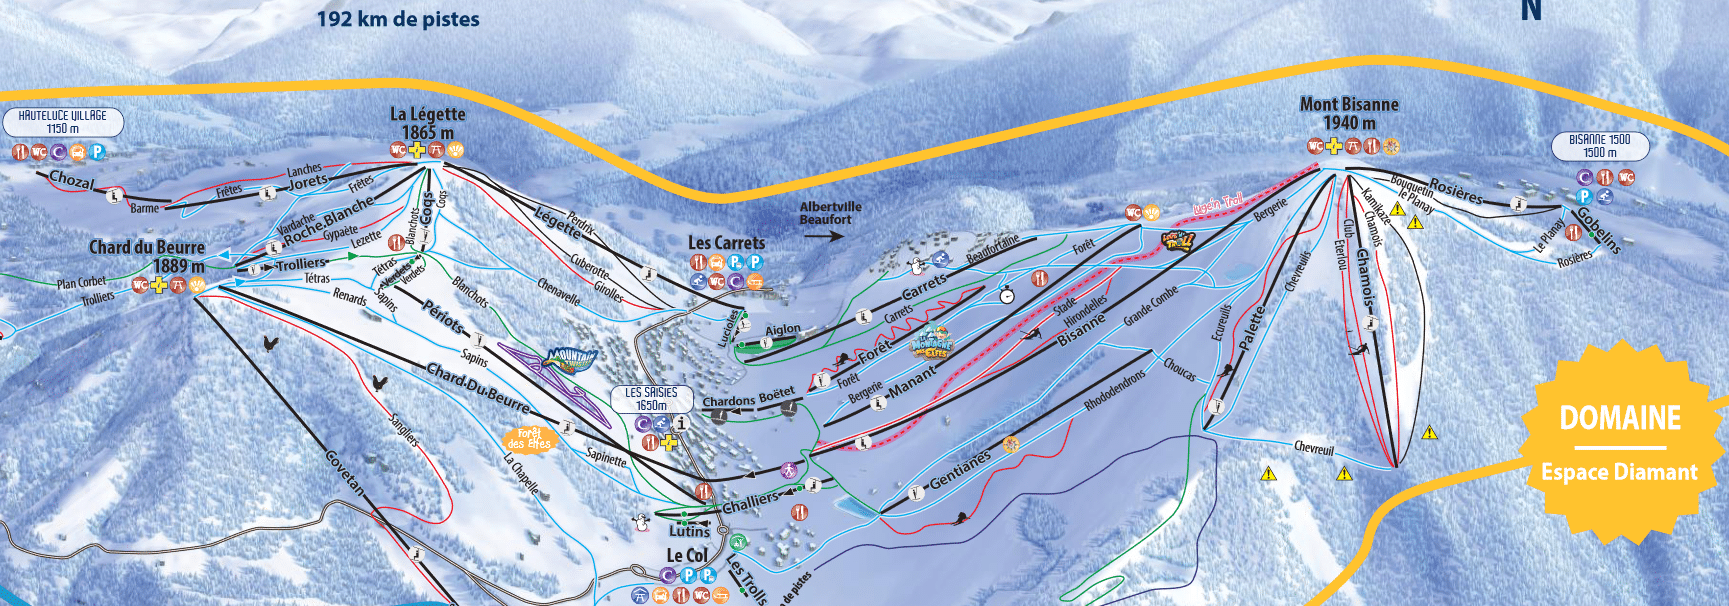 les saisies ski slopes map